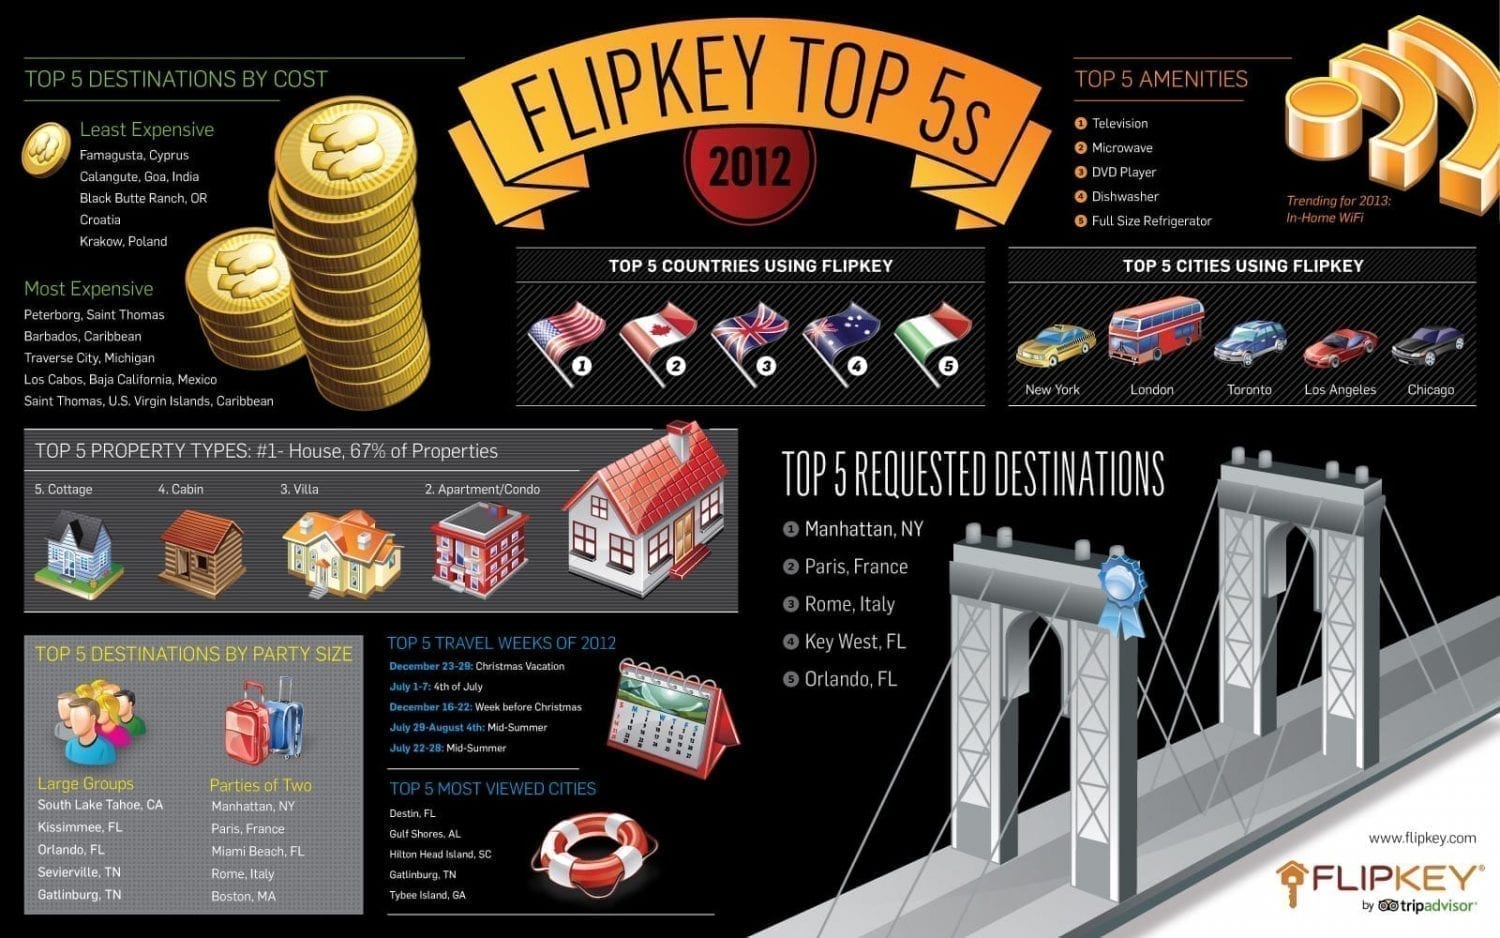 FlipKey’s Travel Predictions for 2013